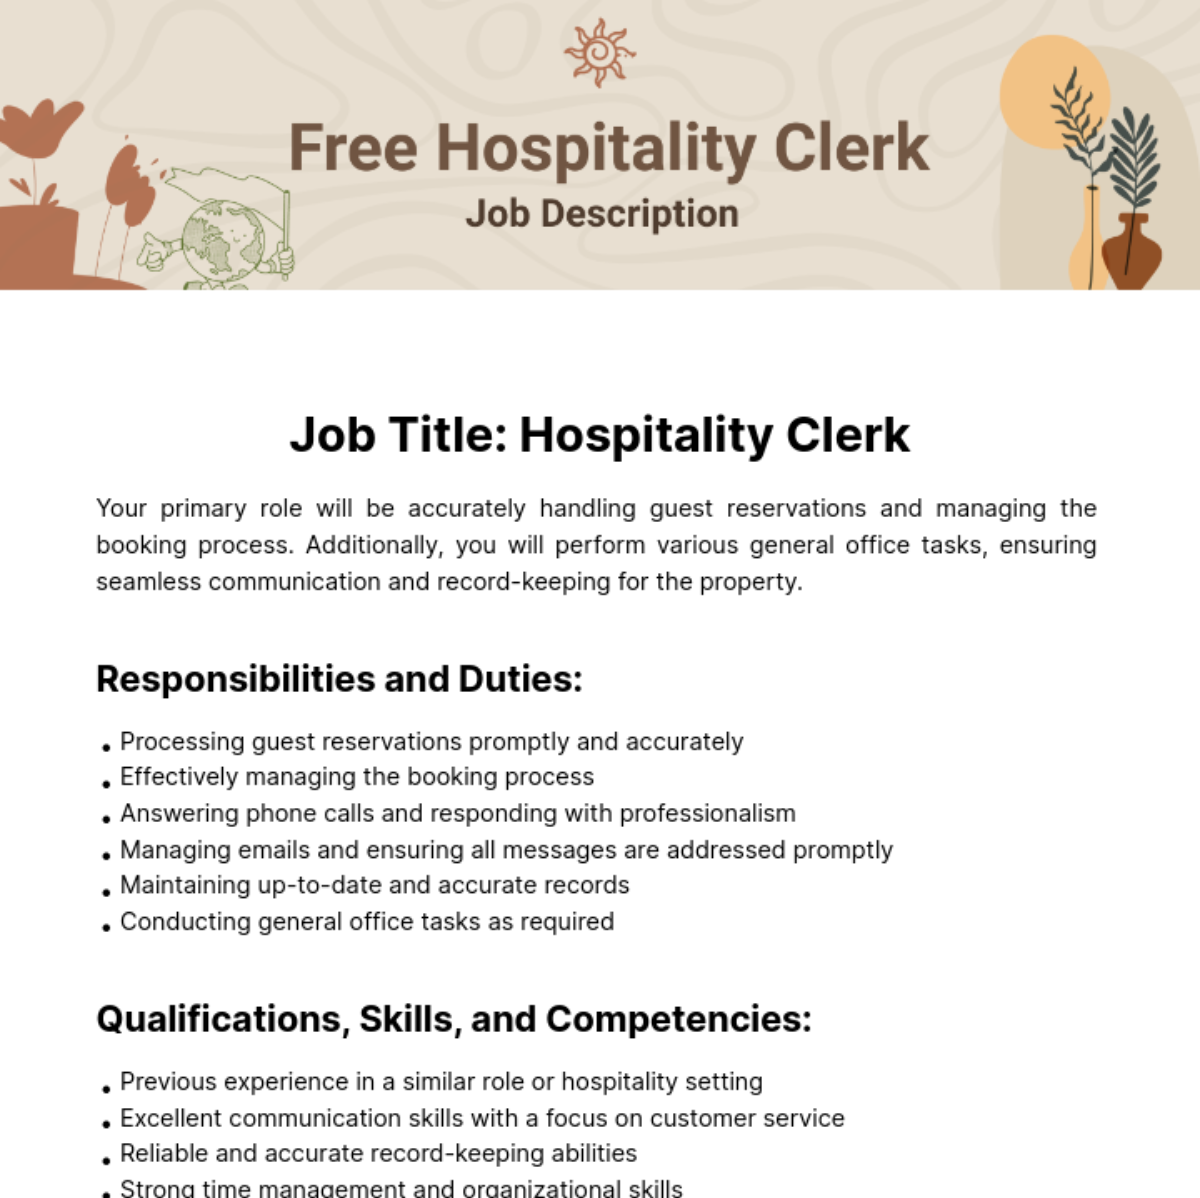 Free Hospitality Clerk Job Description Template